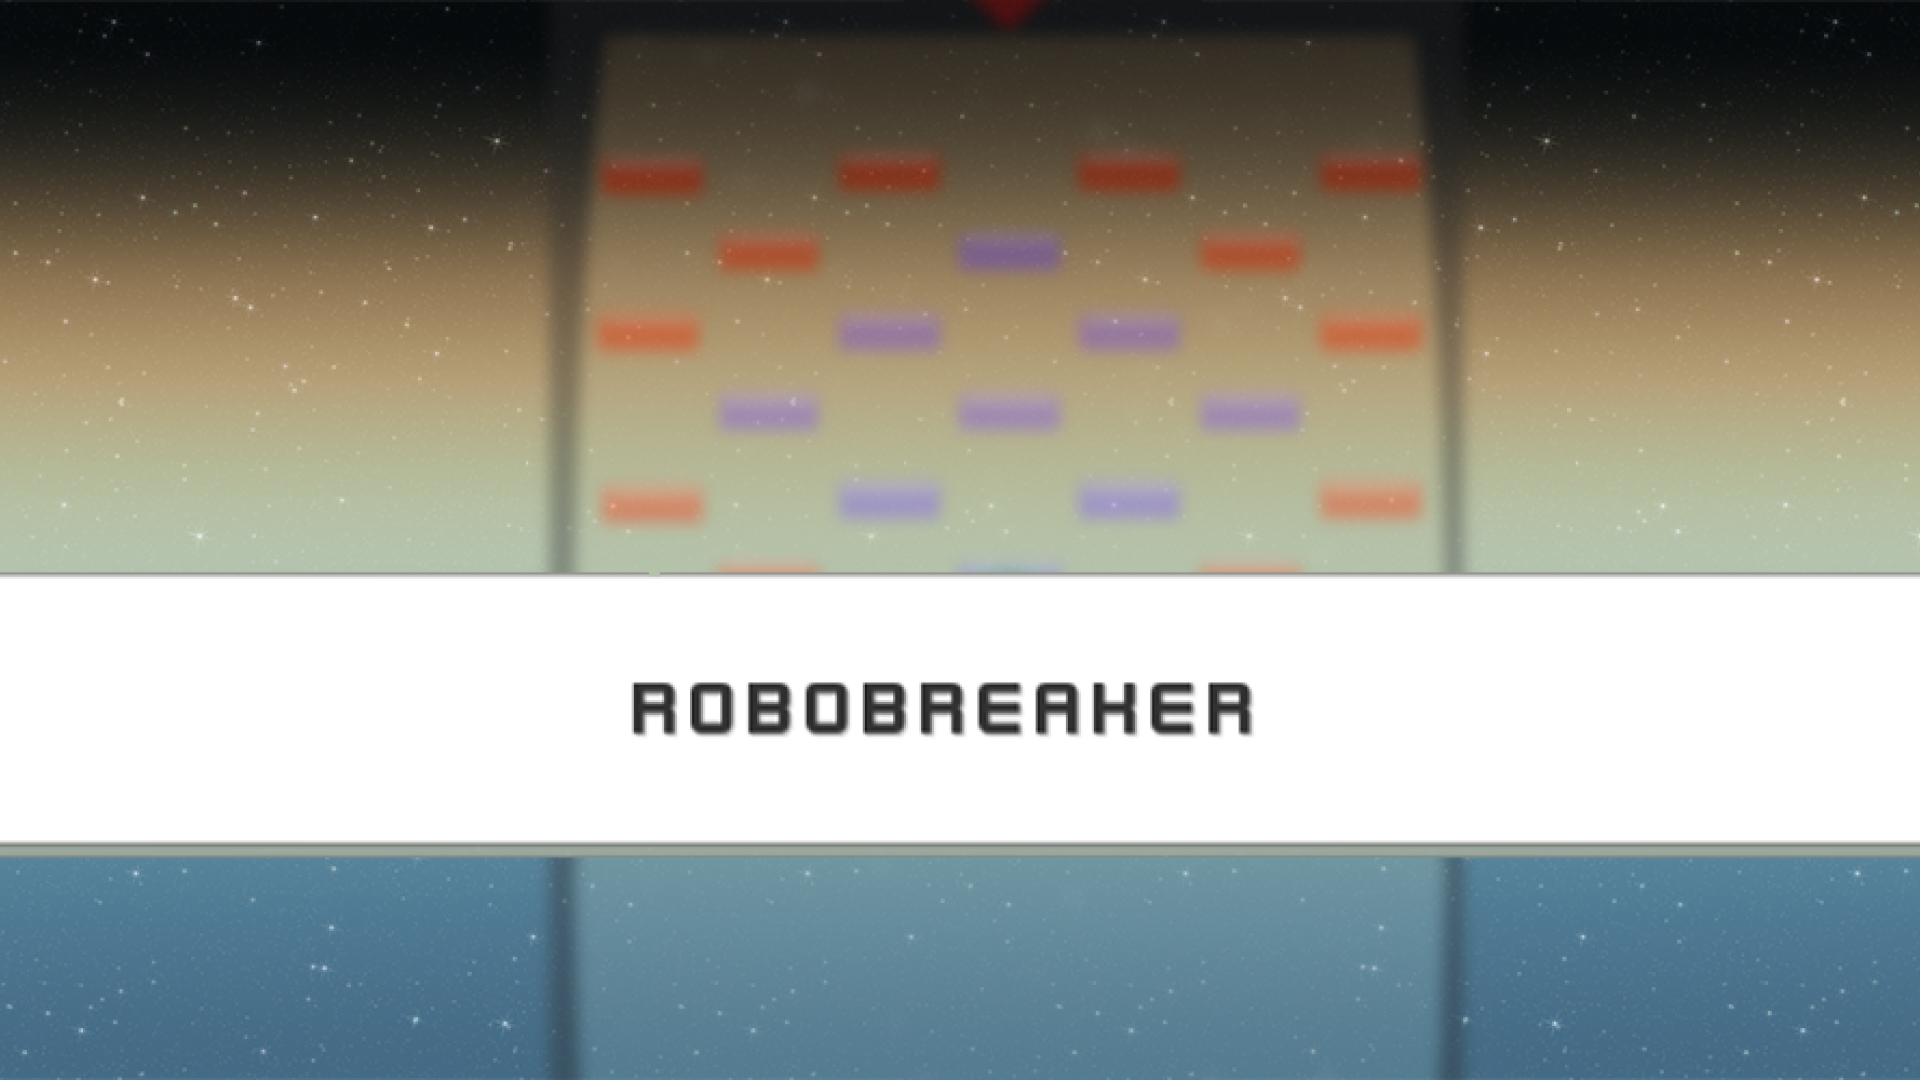 Robobreaker